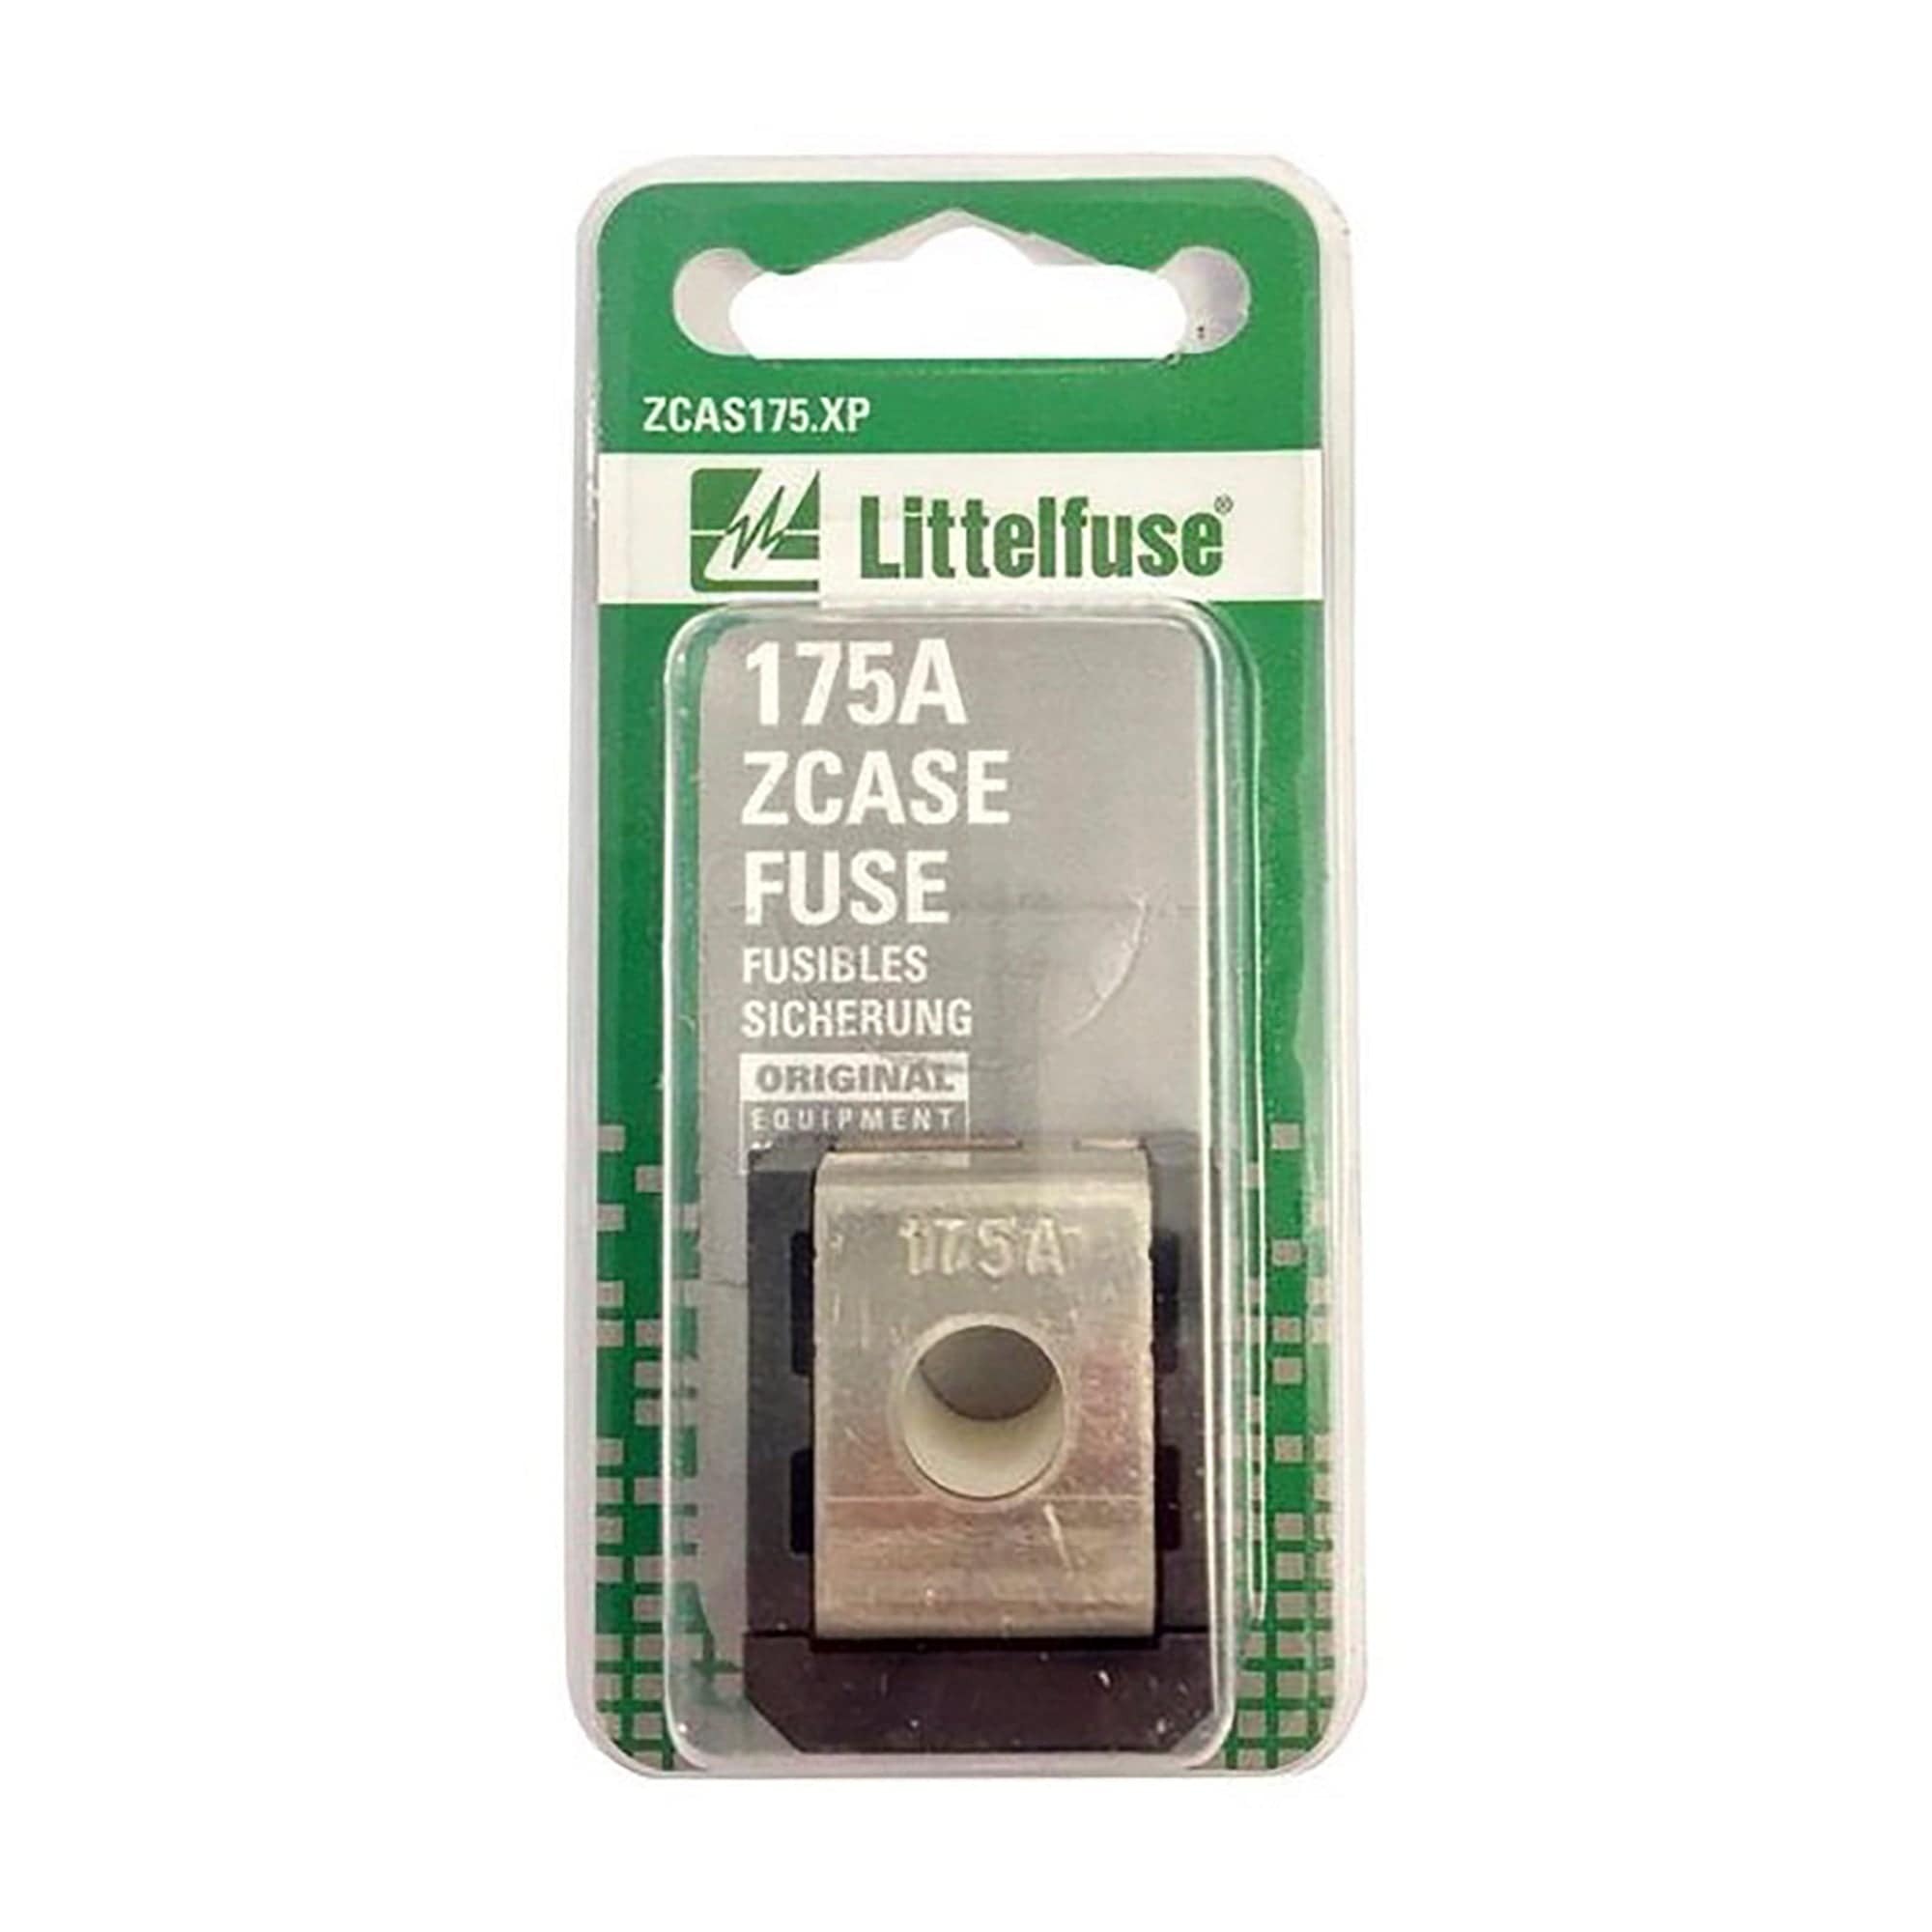 Fuse - Z Case MEGA 32V 175A CARD ZCAS175.XP Littelfuse